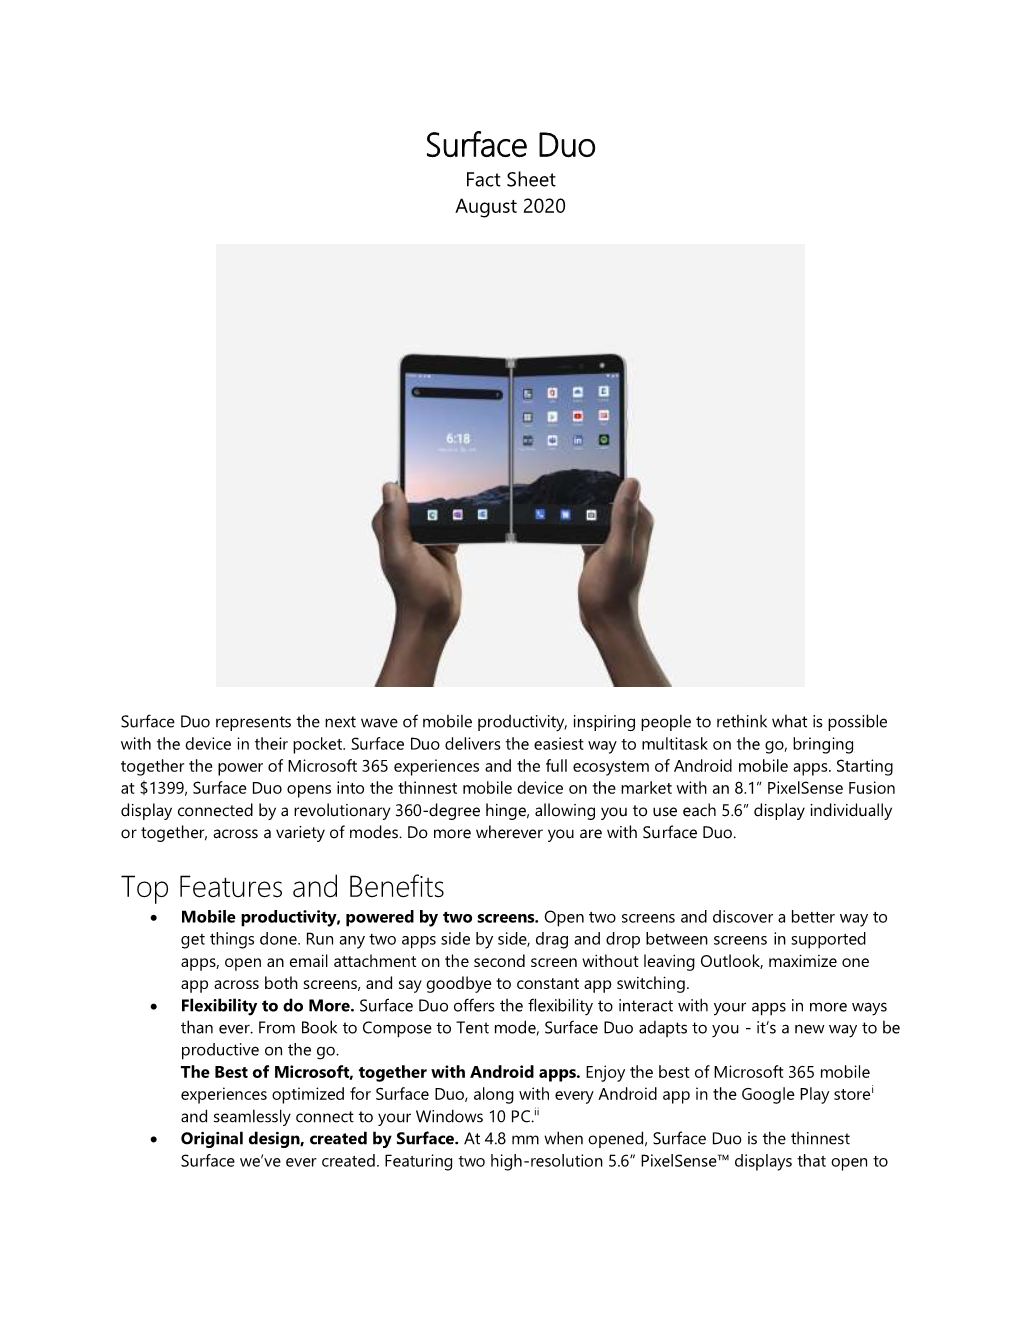 Surface Duo Fact Sheet August 2020